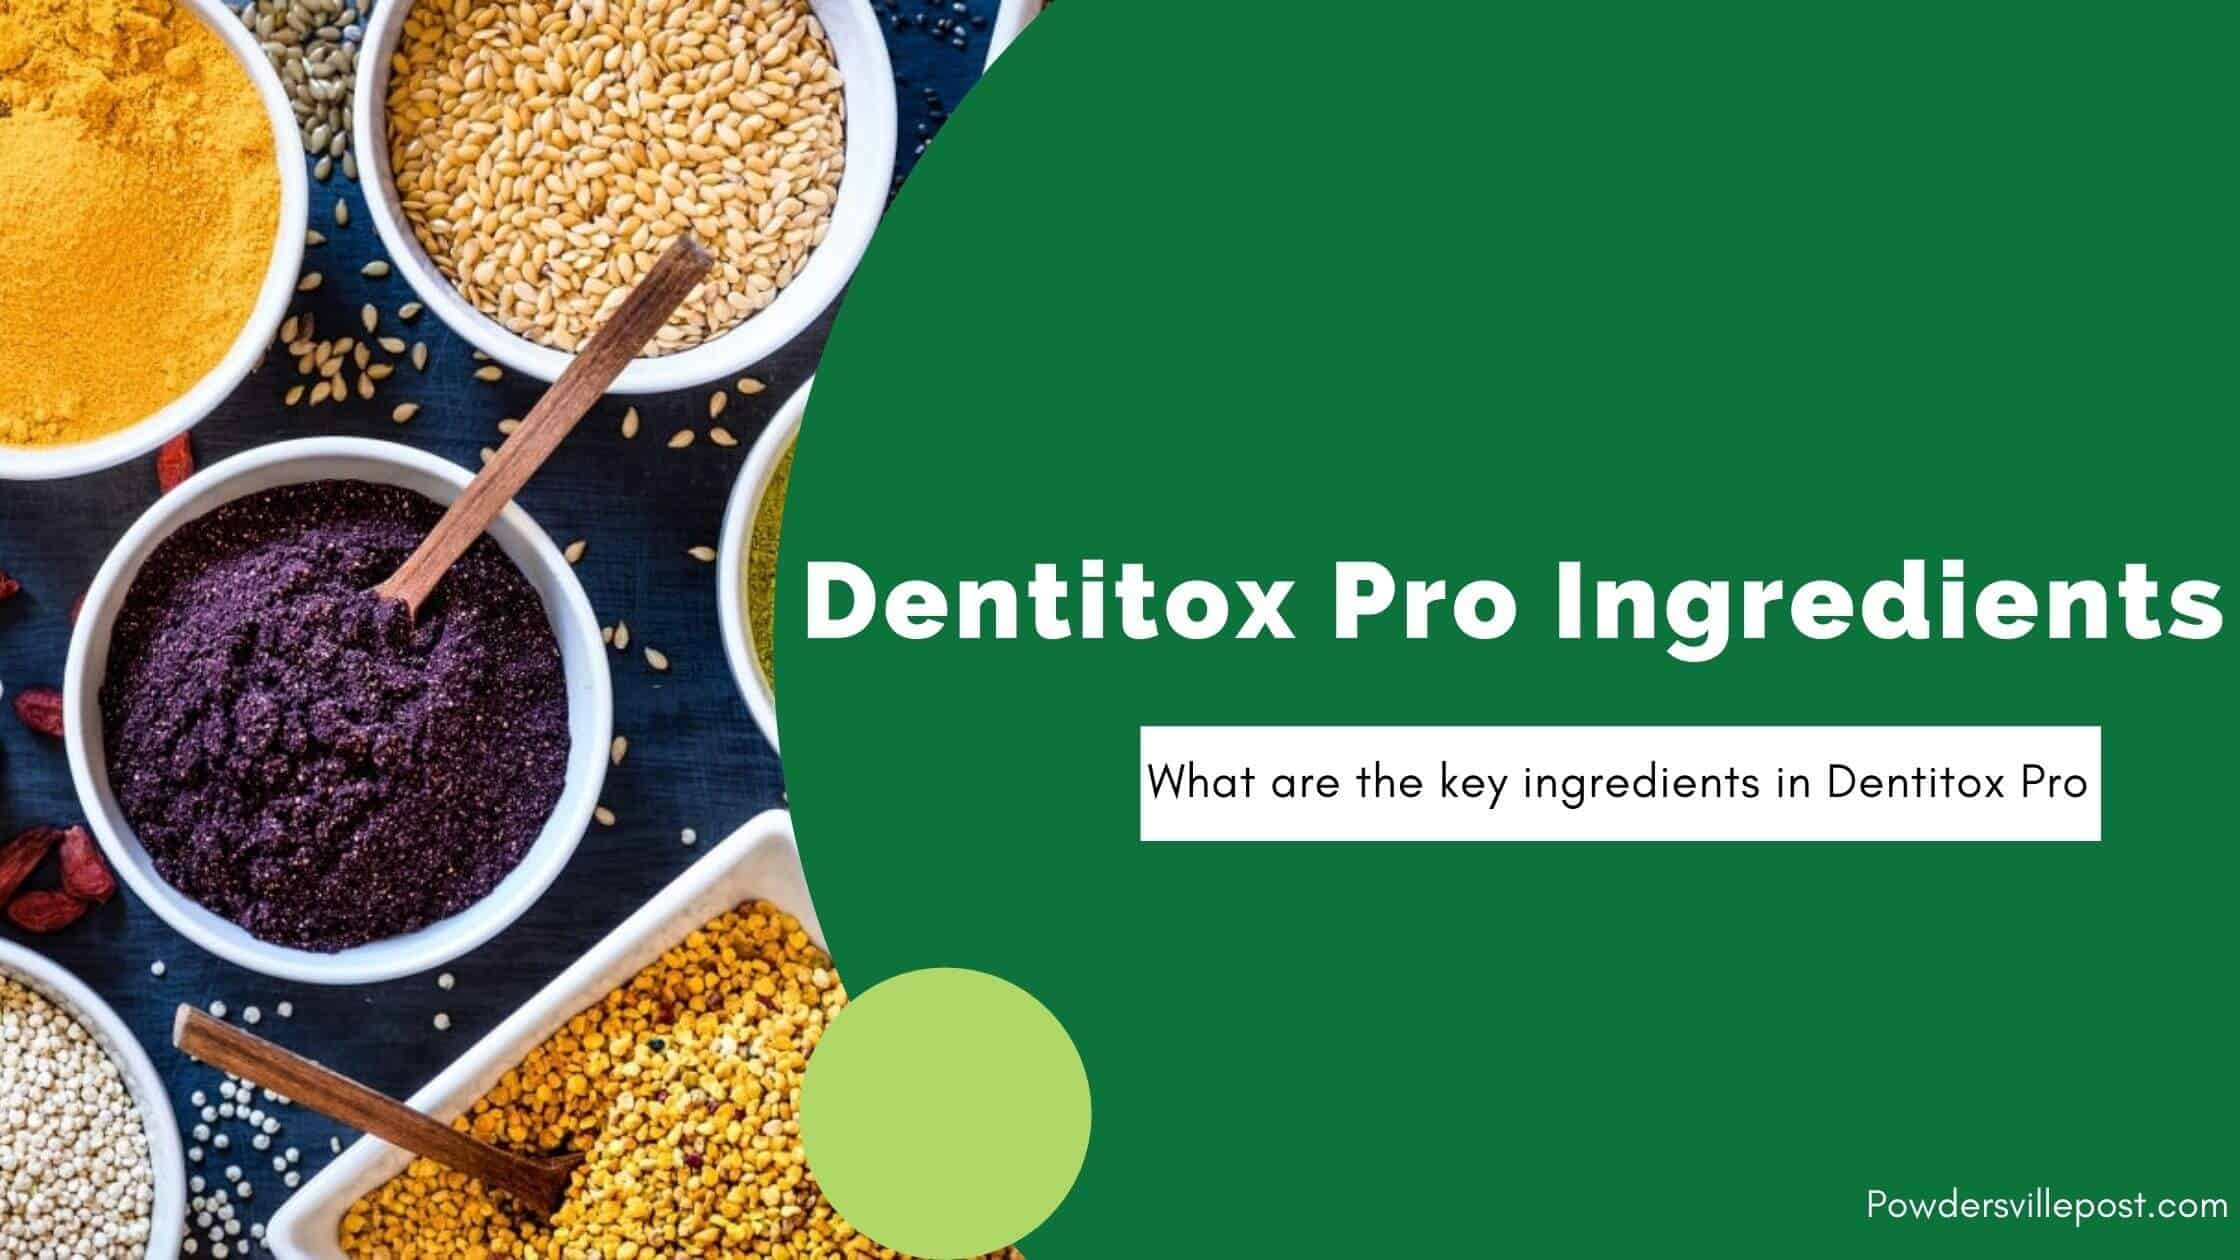 Dentitox pro Ingredients